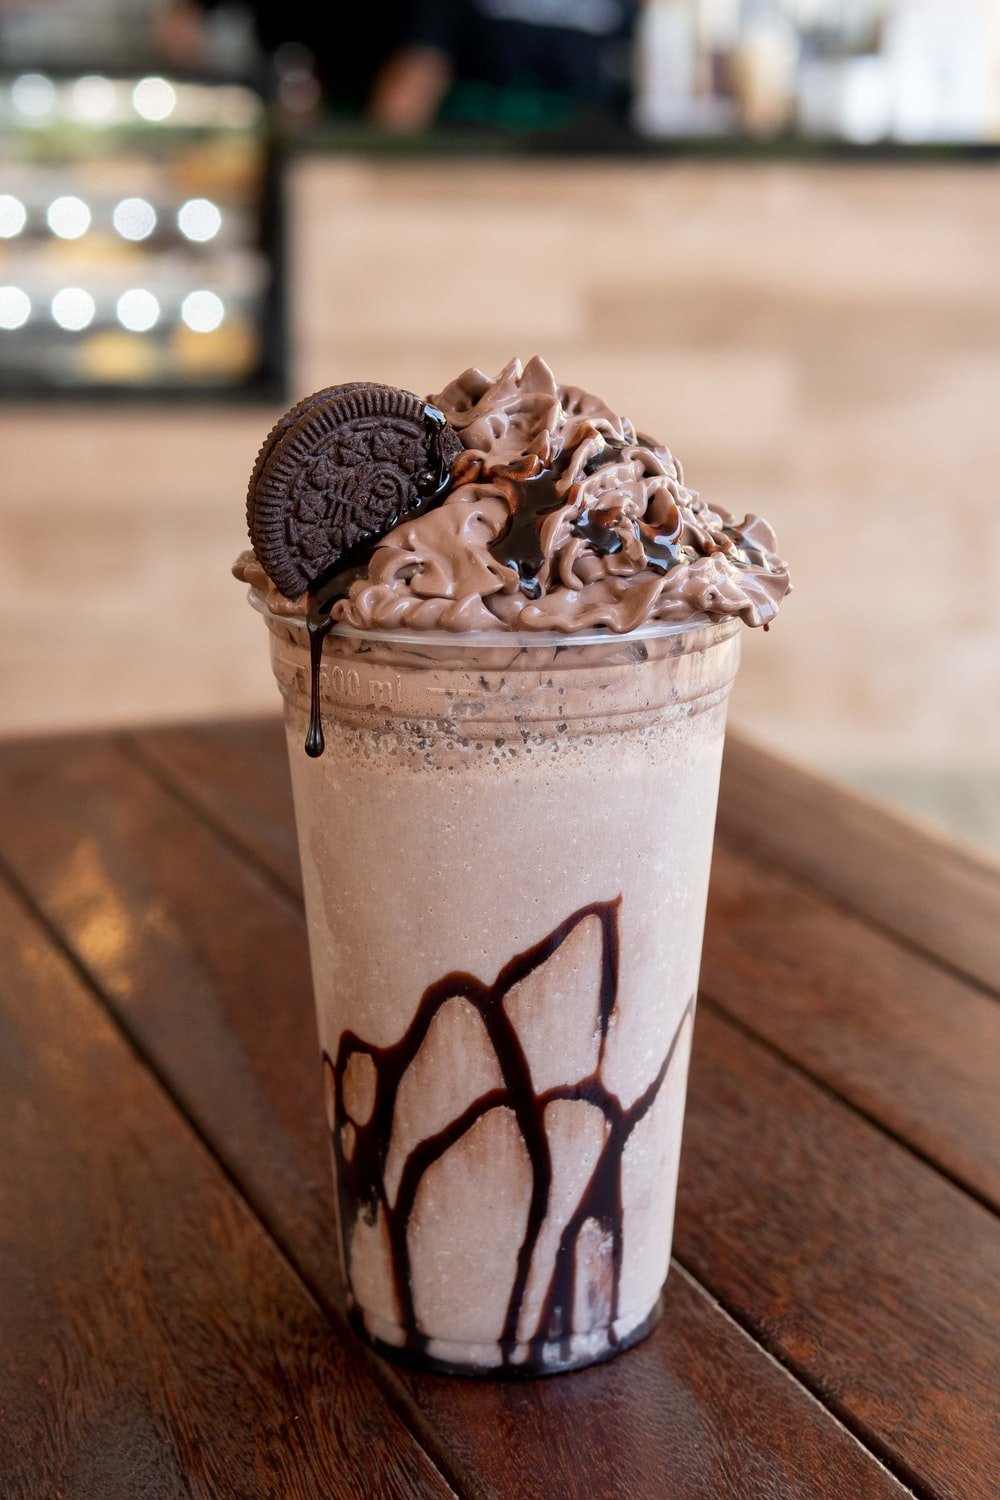 Chocolate Milkshake Picture. Download Free Image